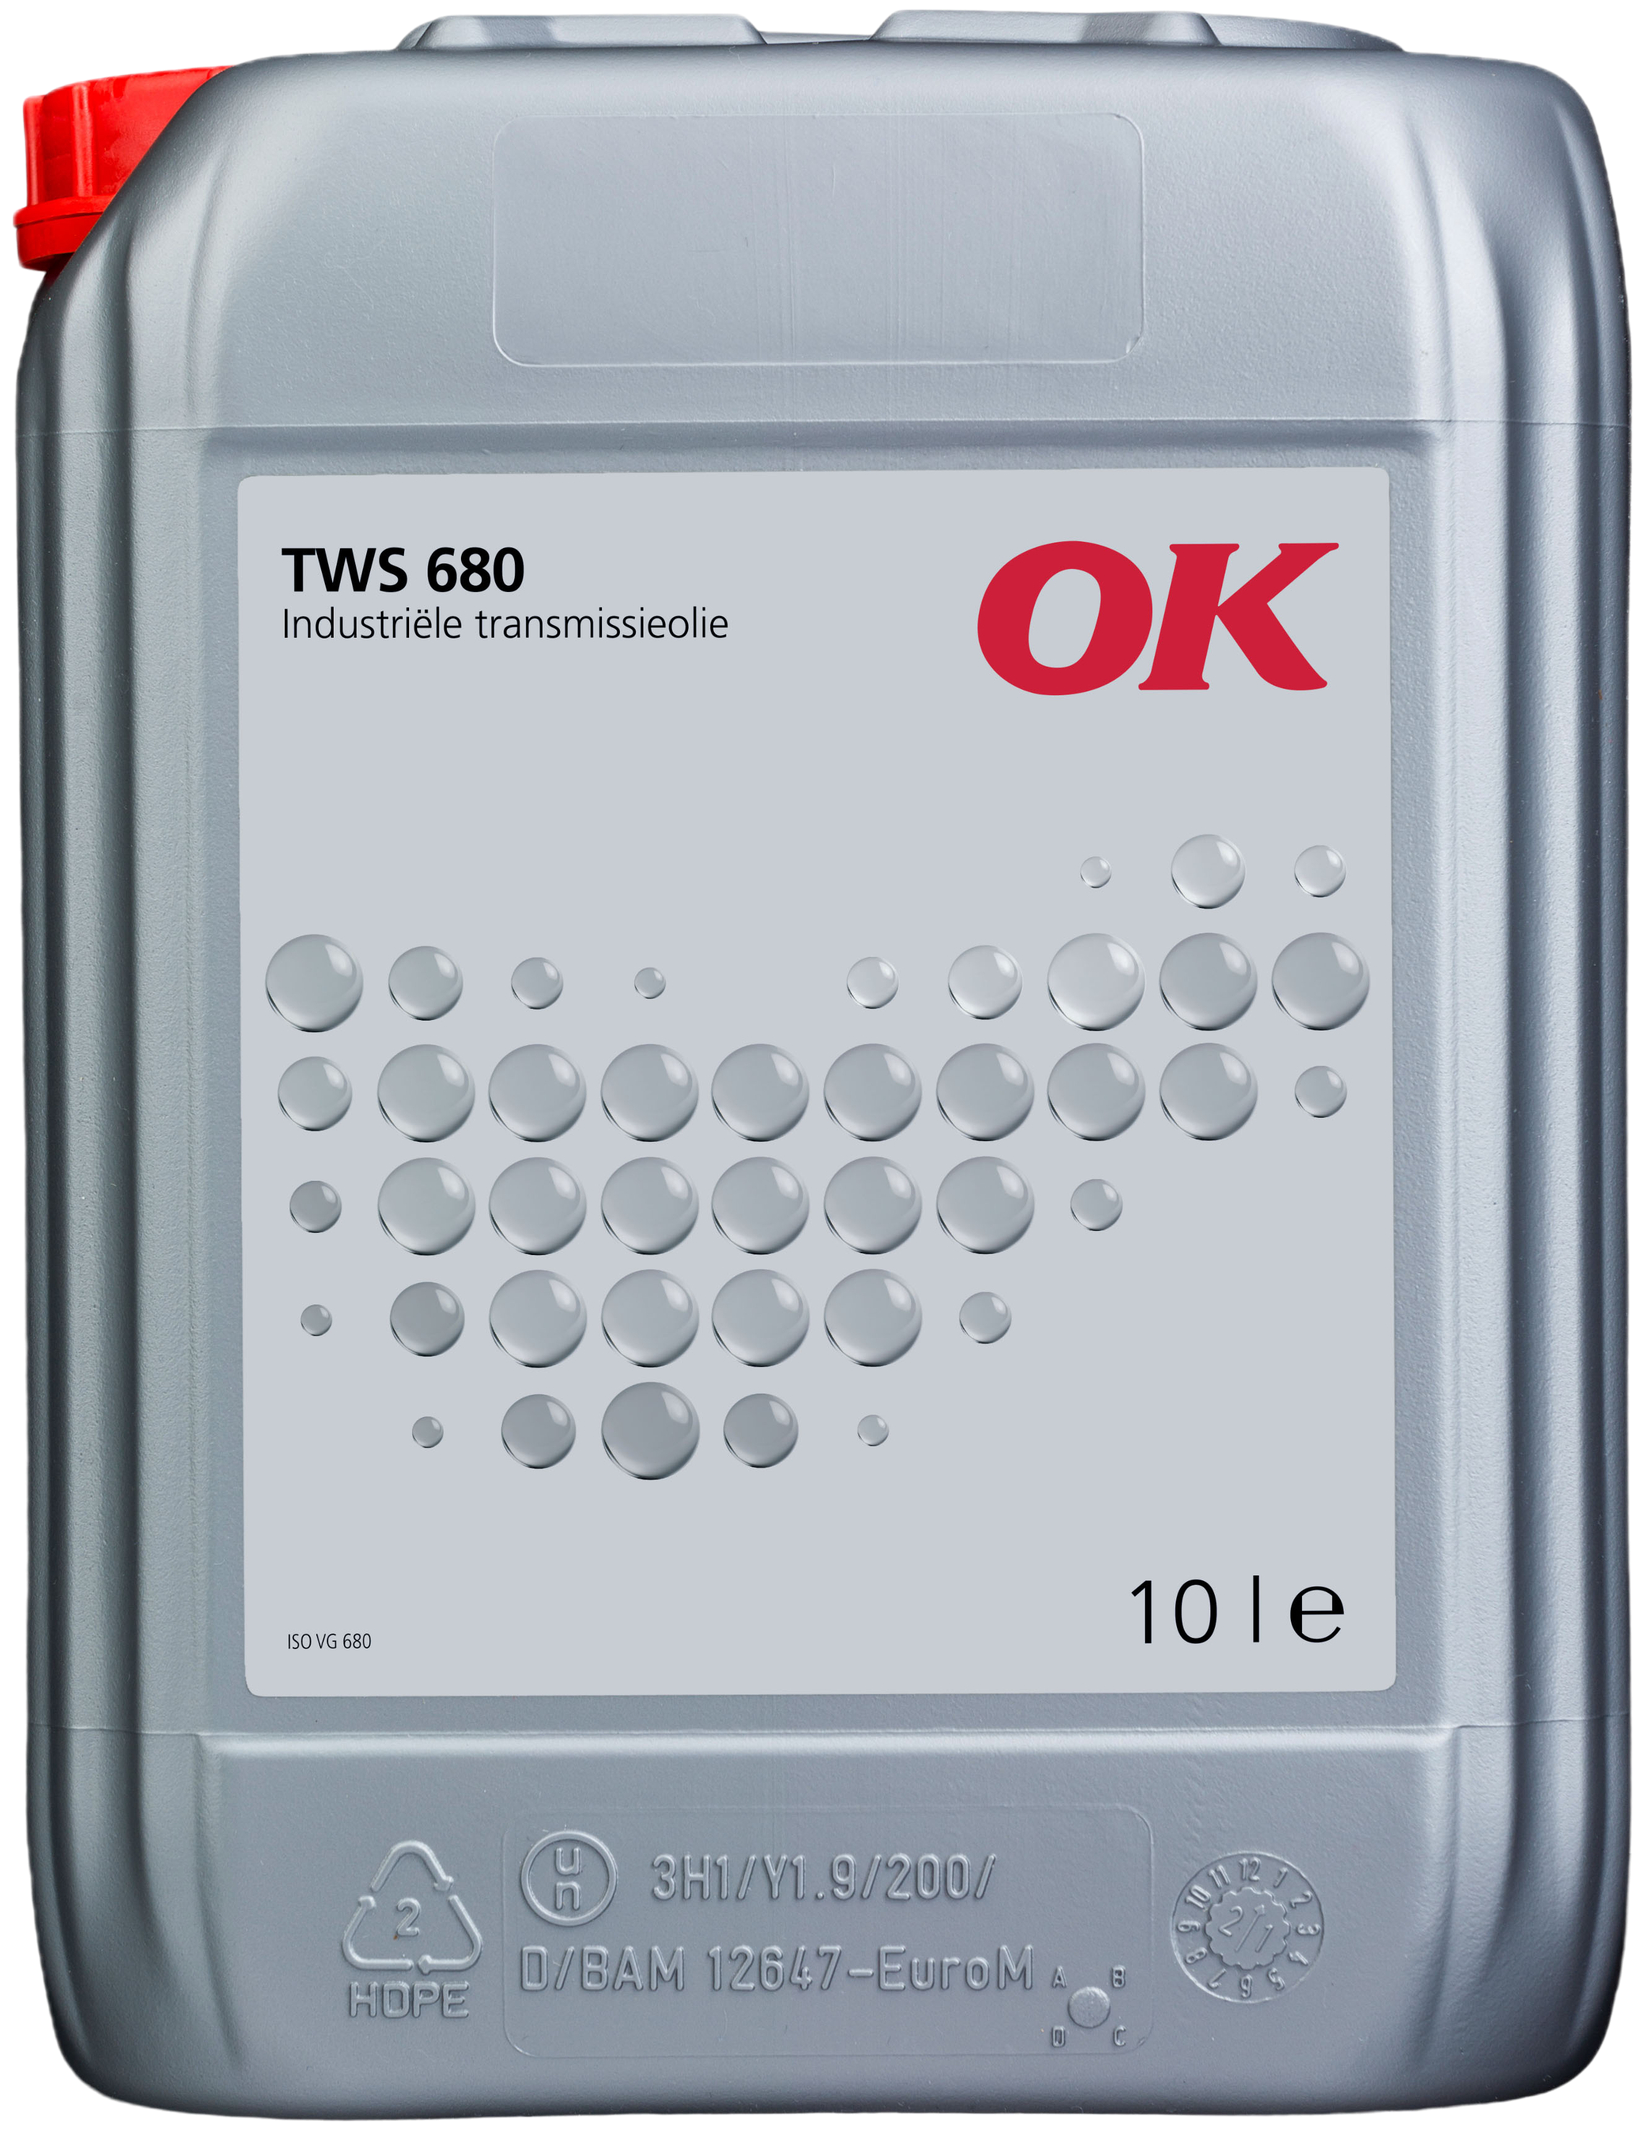 OK TWS 680, 10 lt